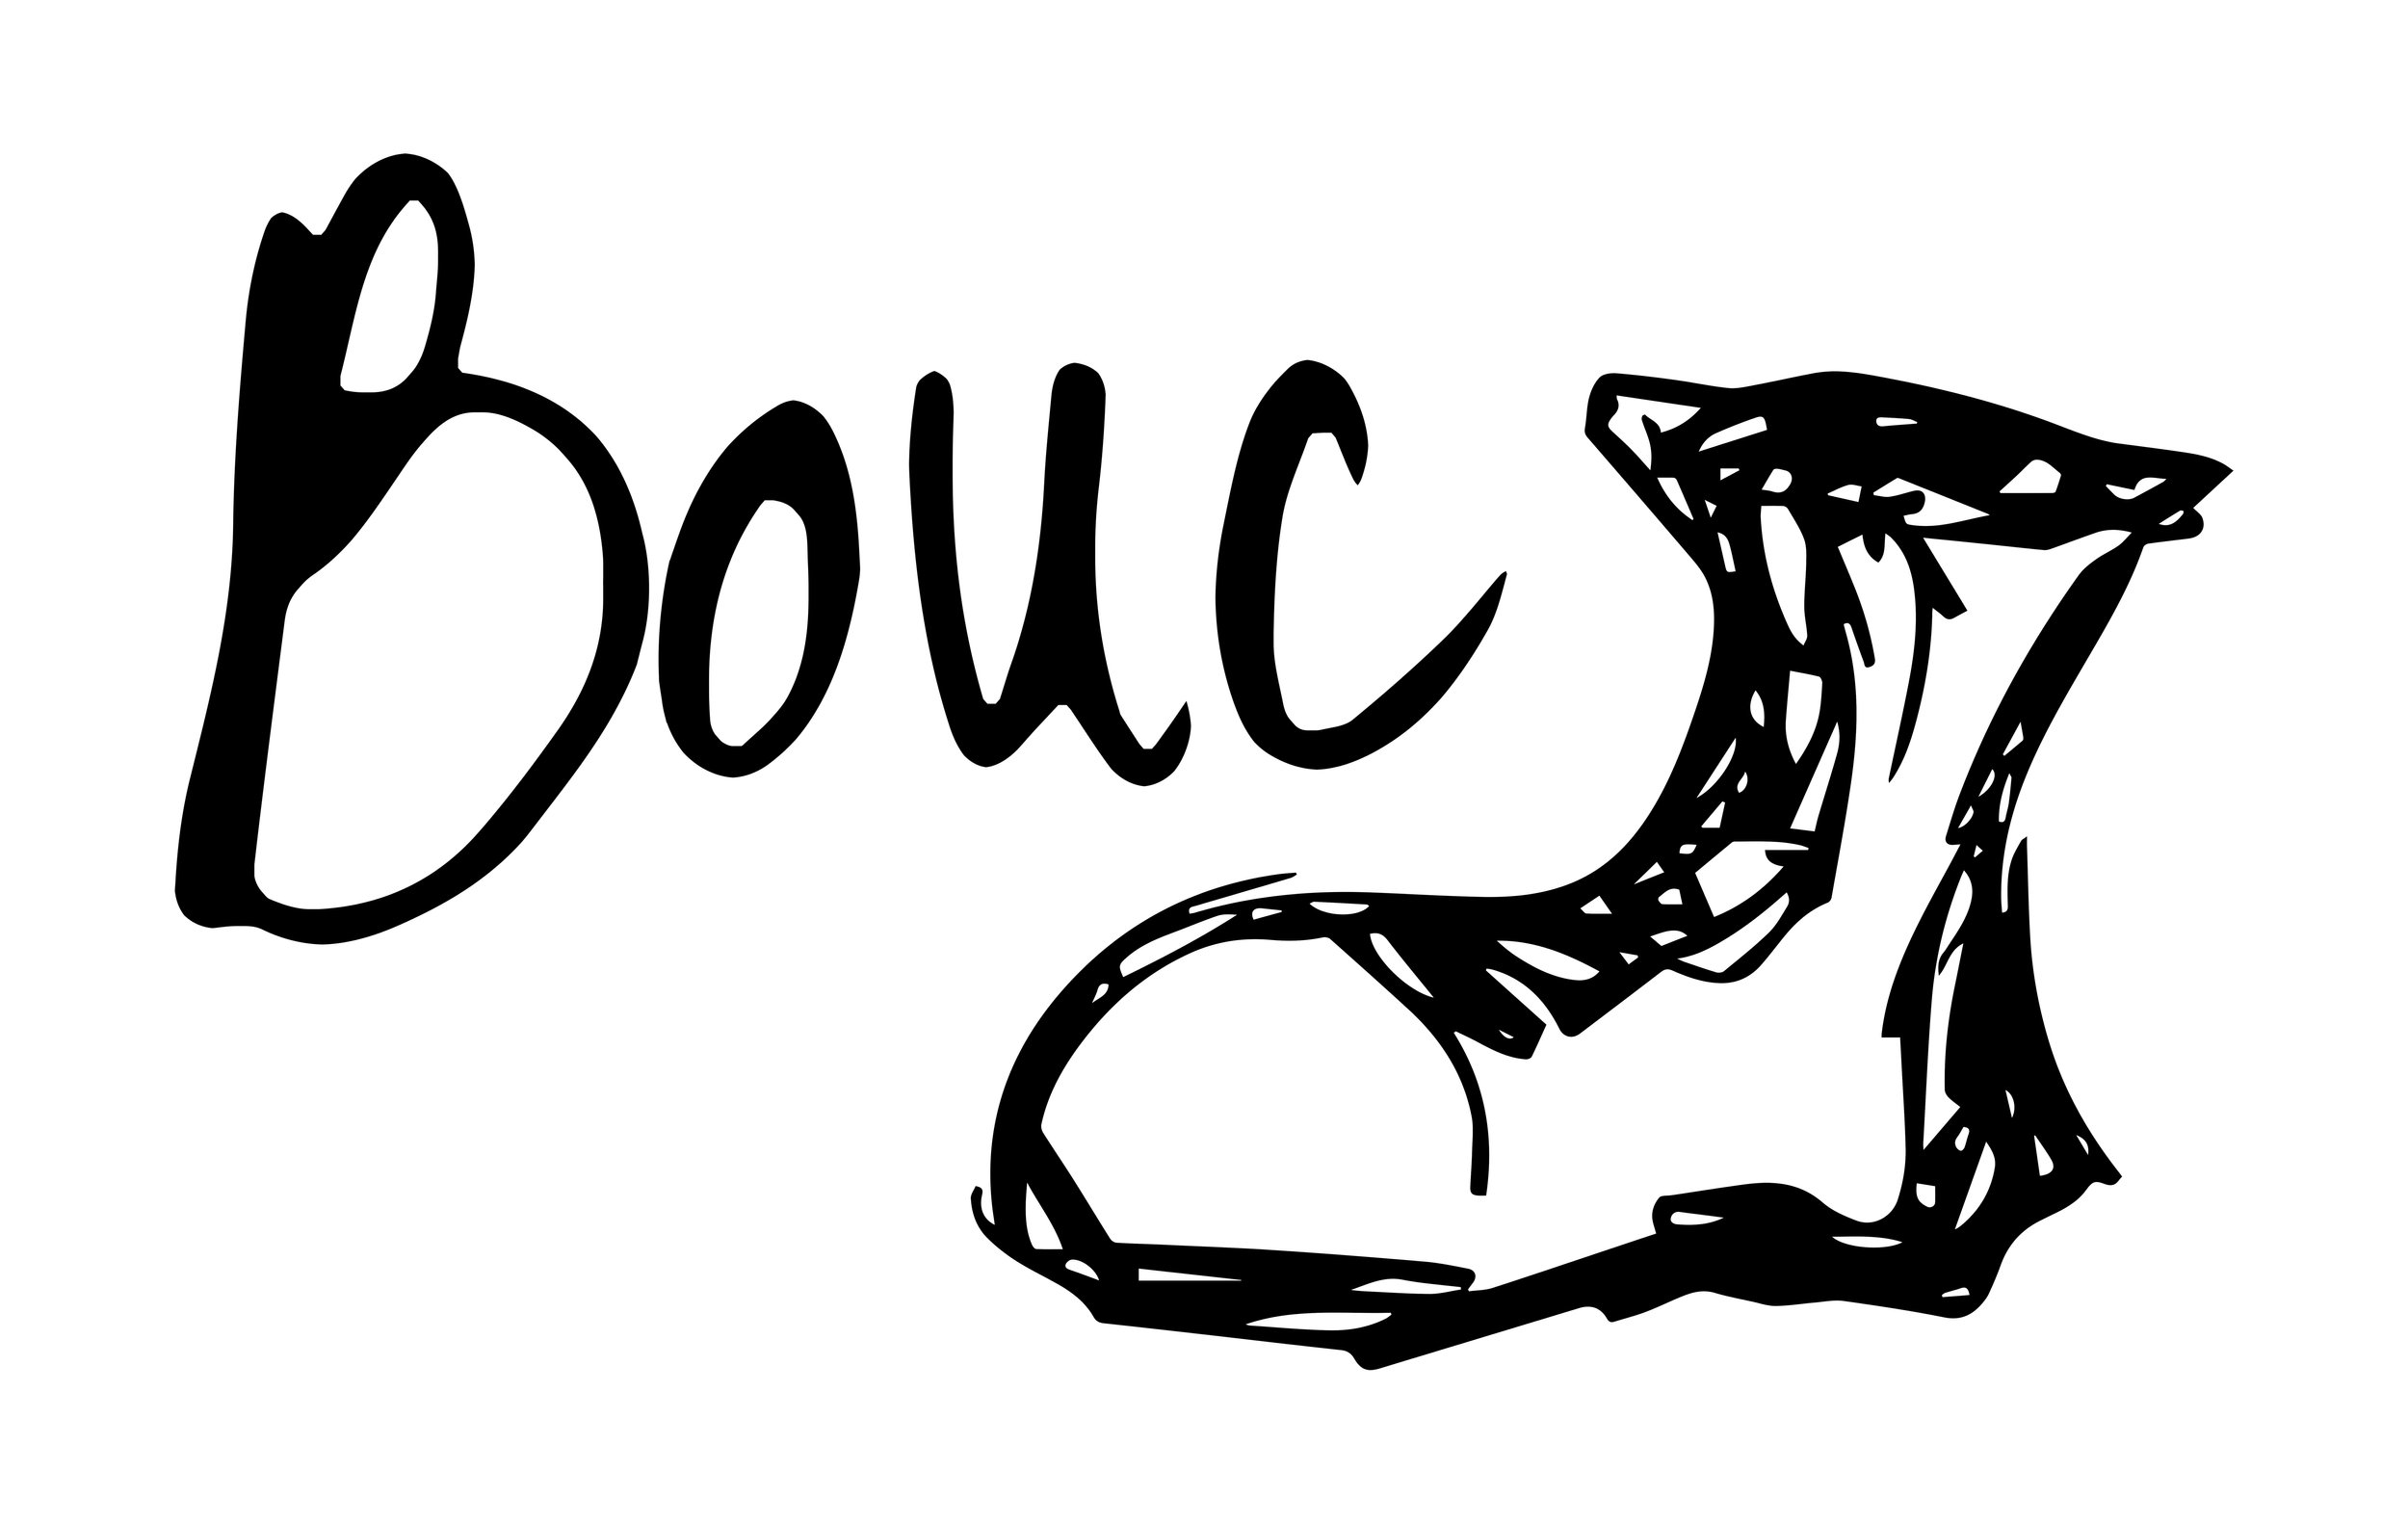 logo-bouc-2019.jpg